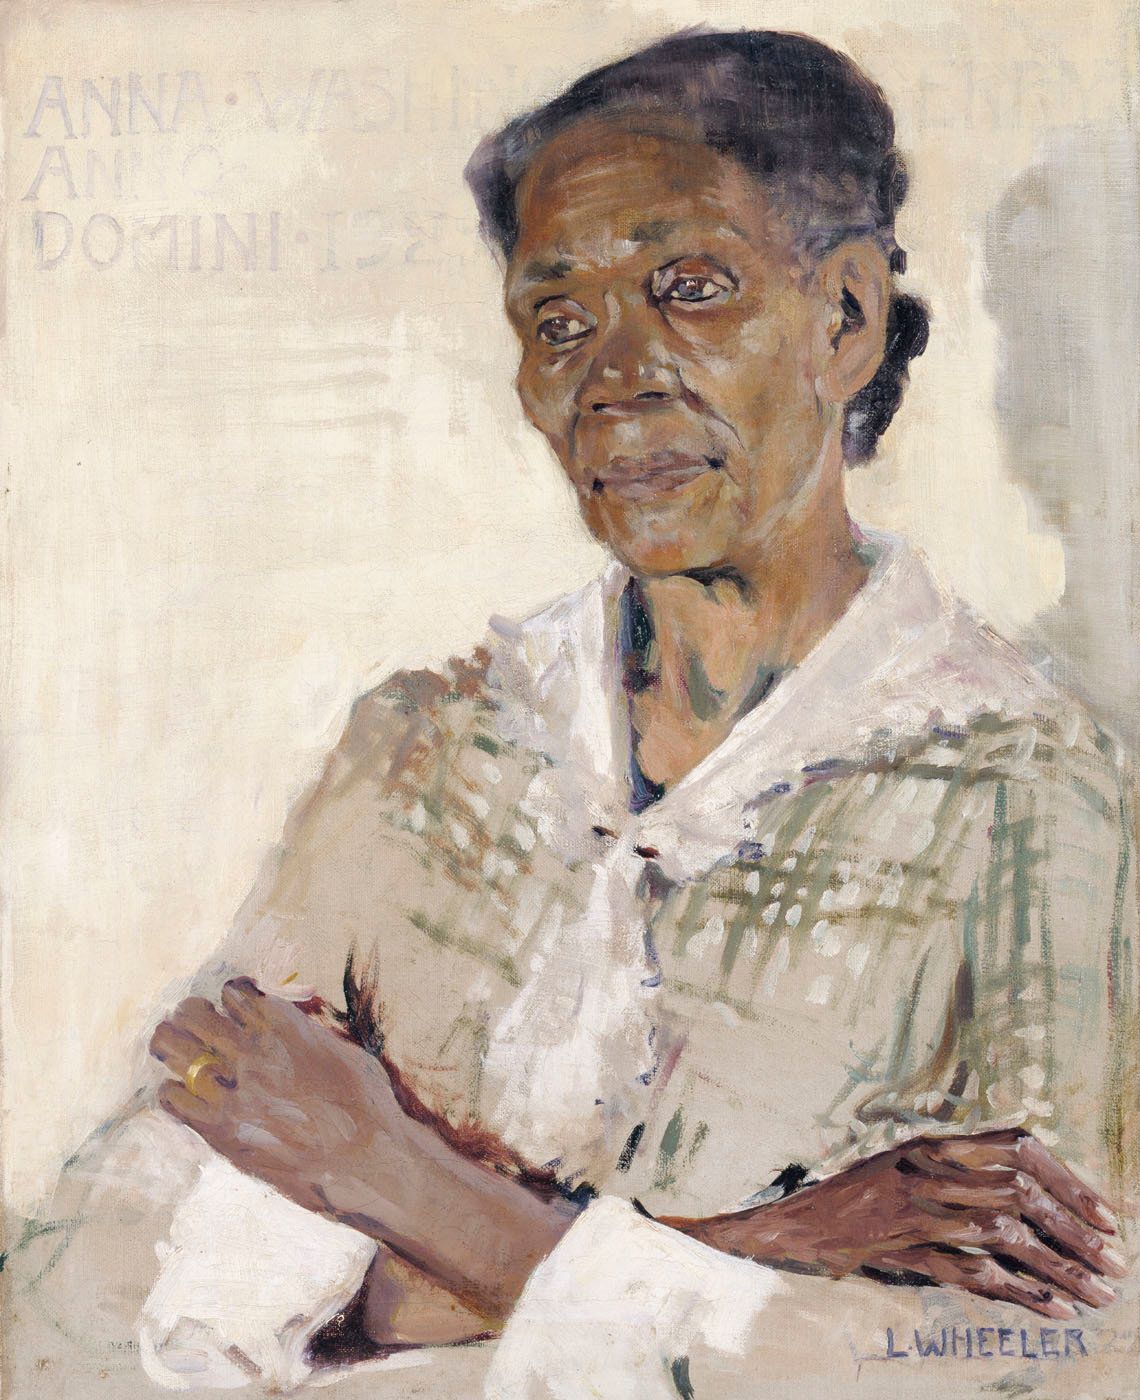 Laura Wheeler Waring, "Anna Washington Derry," 1927, oil on canvas, 20 x 16 in. (50.8 x 40.5 cm)